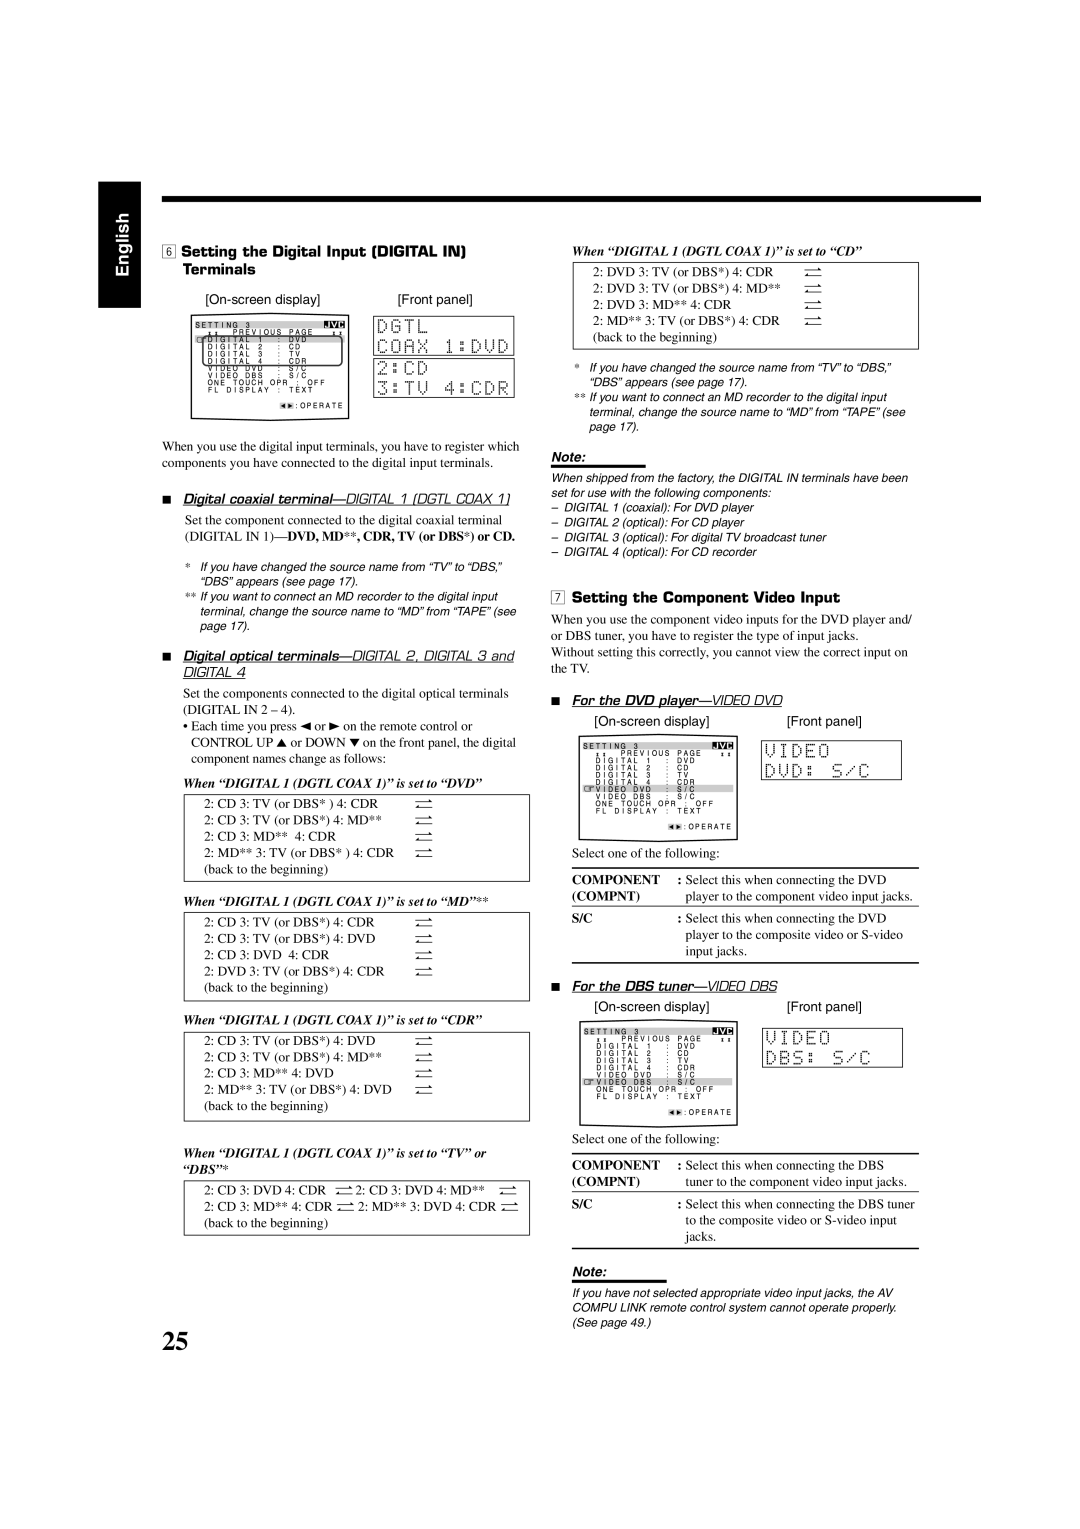 JVC RX-8020VBK manual English, Digital coaxial terminal-DIGITAL 1 DGTL COAX, DIGITAL IN 1-DVD, MD**, CDR, TV or DBS* or CD 